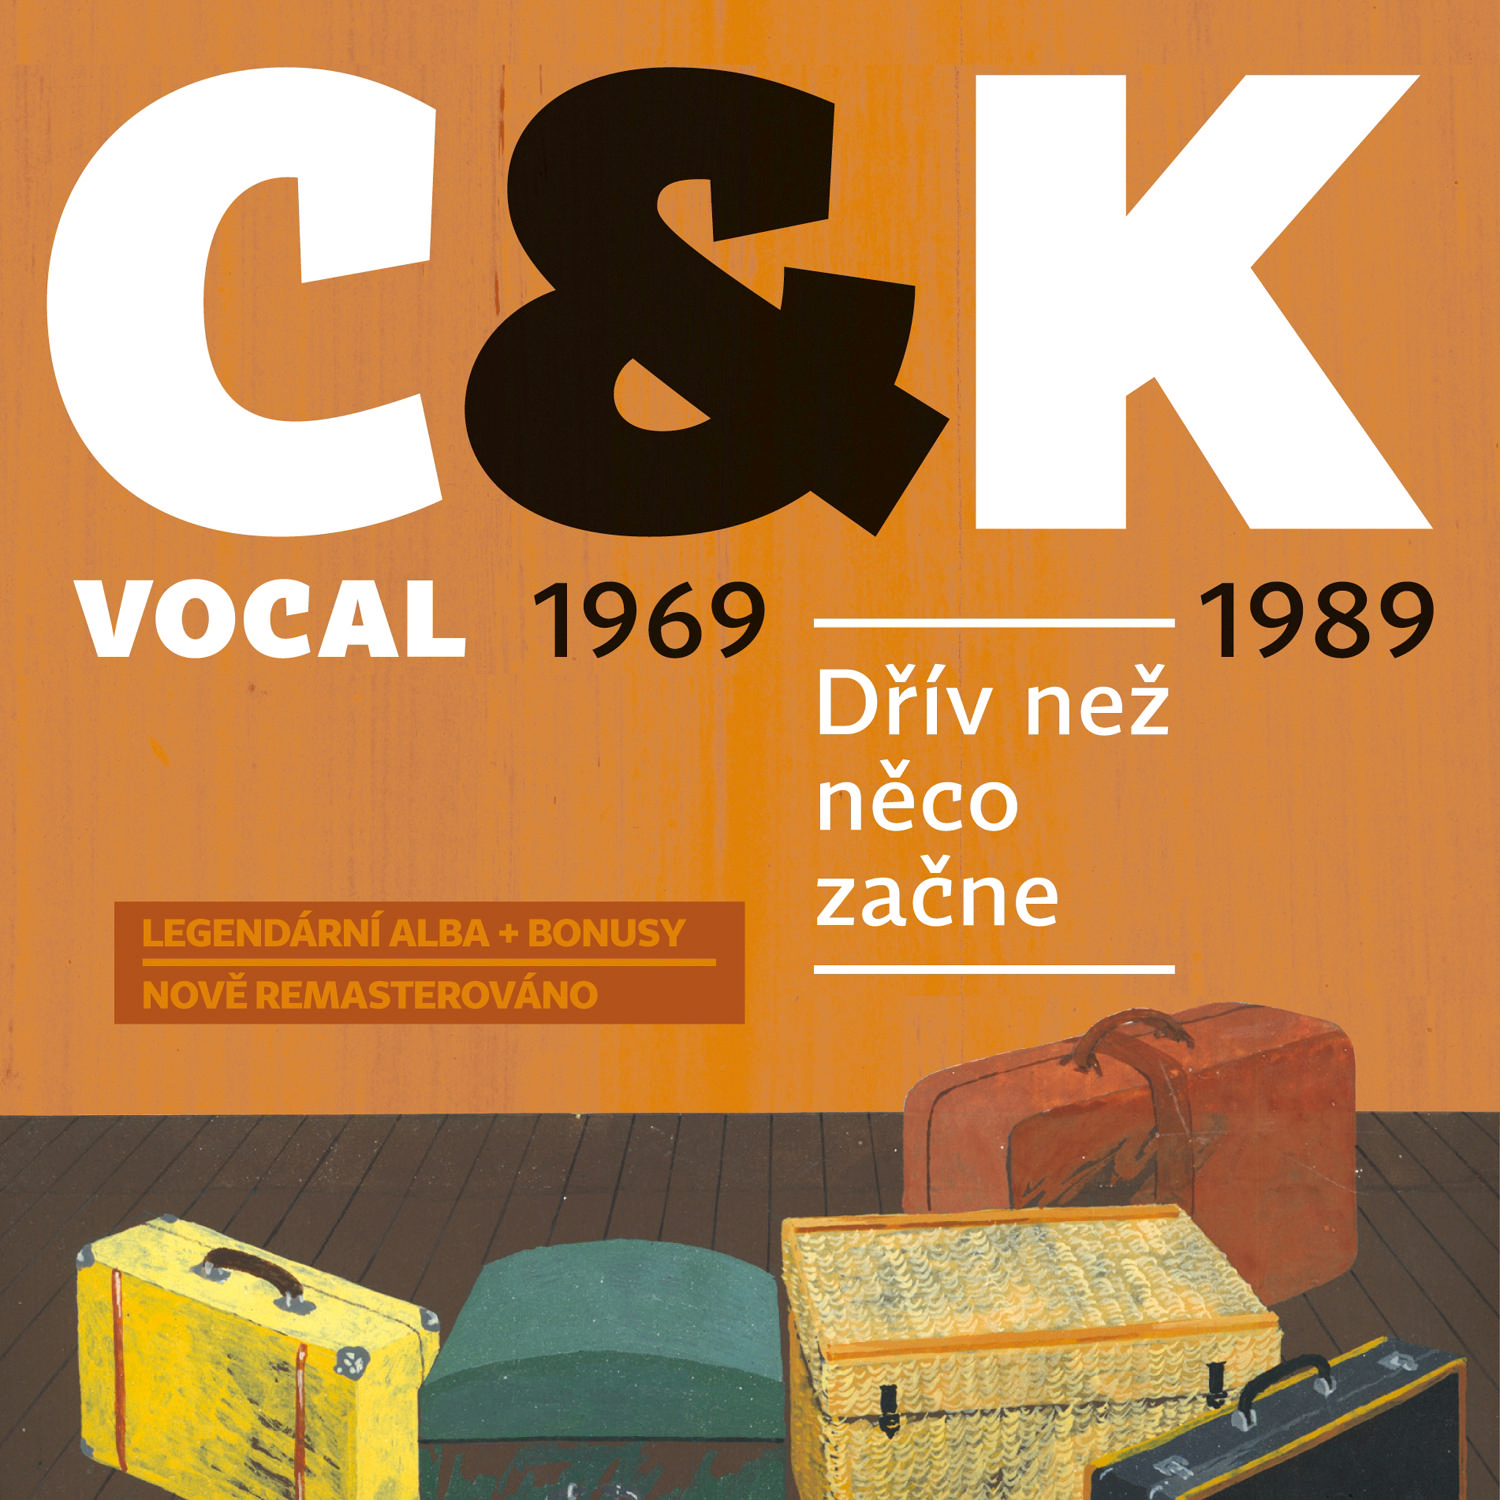 CD Shop - C&K VOCAL DRIV NEZ NECO ZACNE